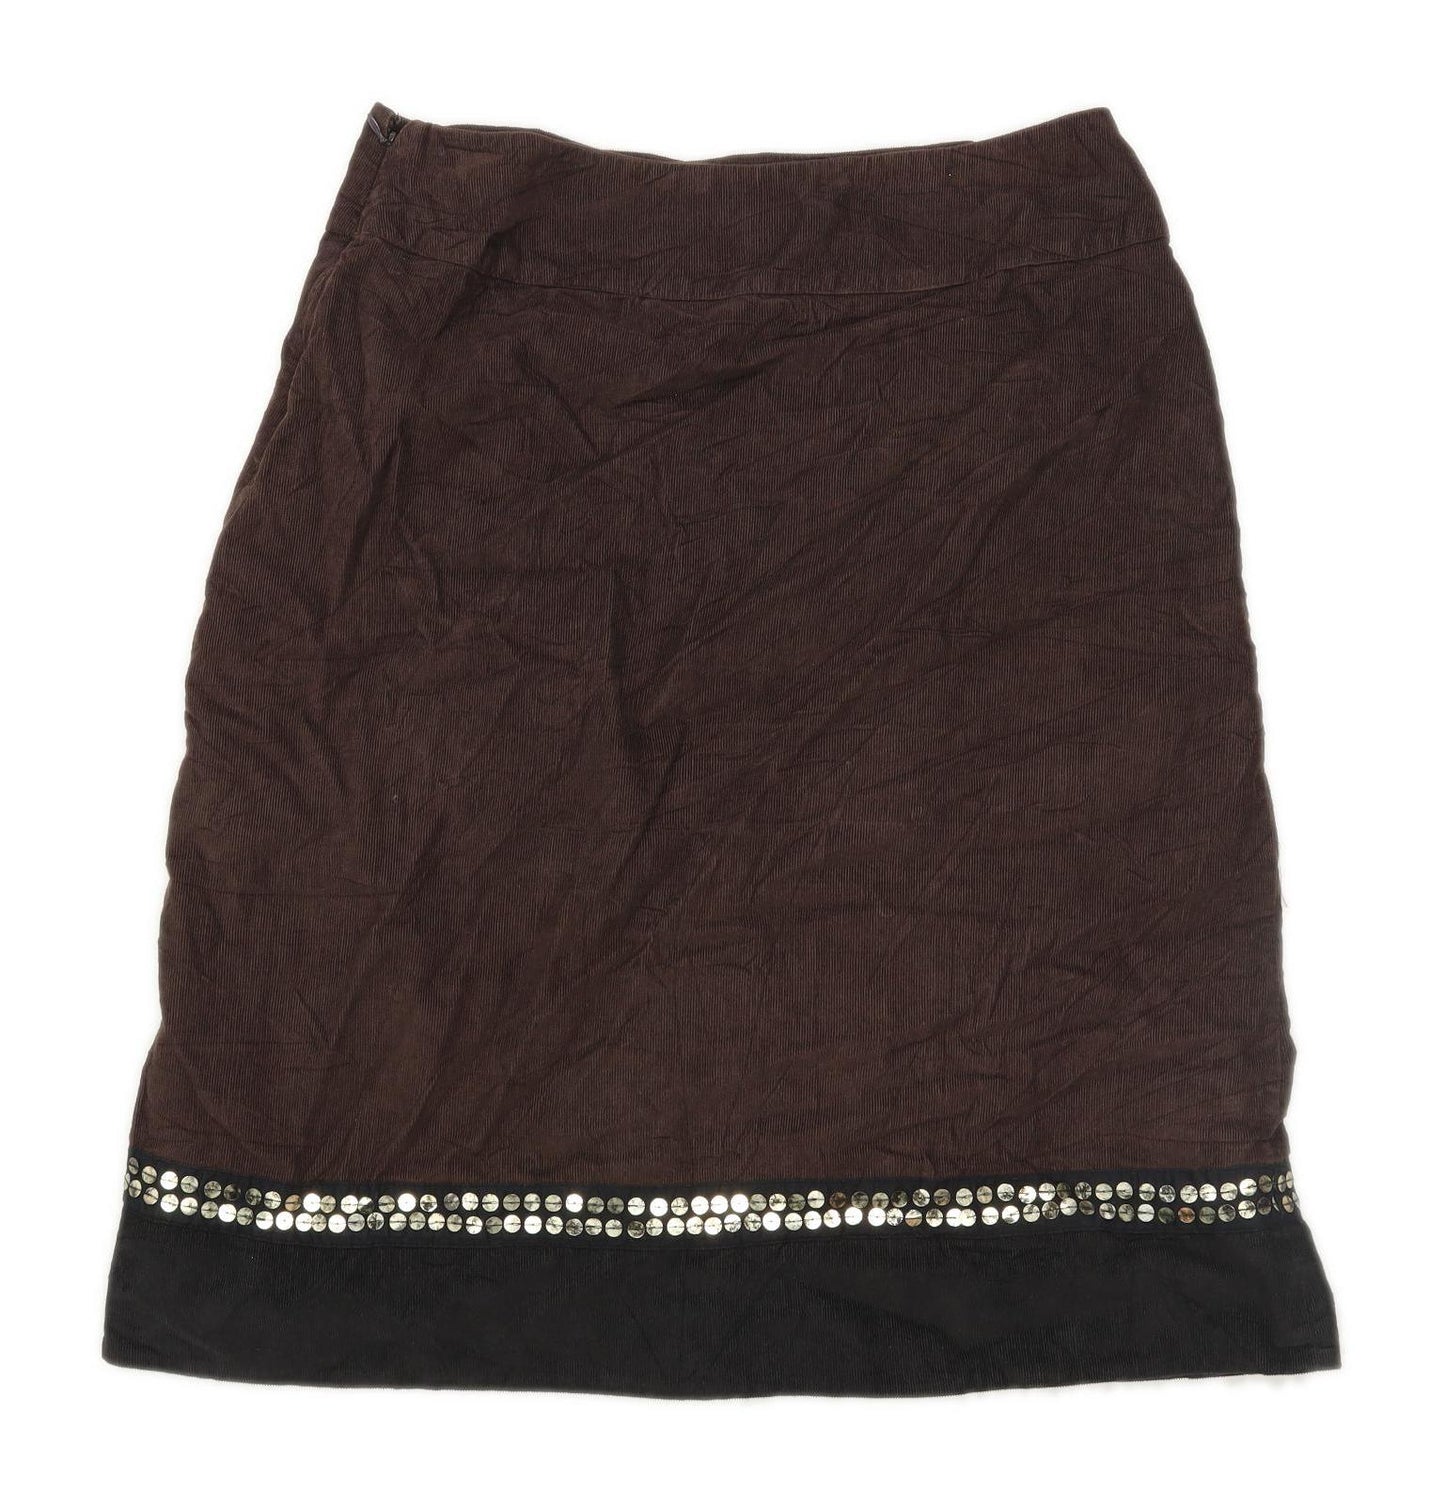 Monsoon Womens Size 12 Corduroy Floral Brown Skirt (Regular)